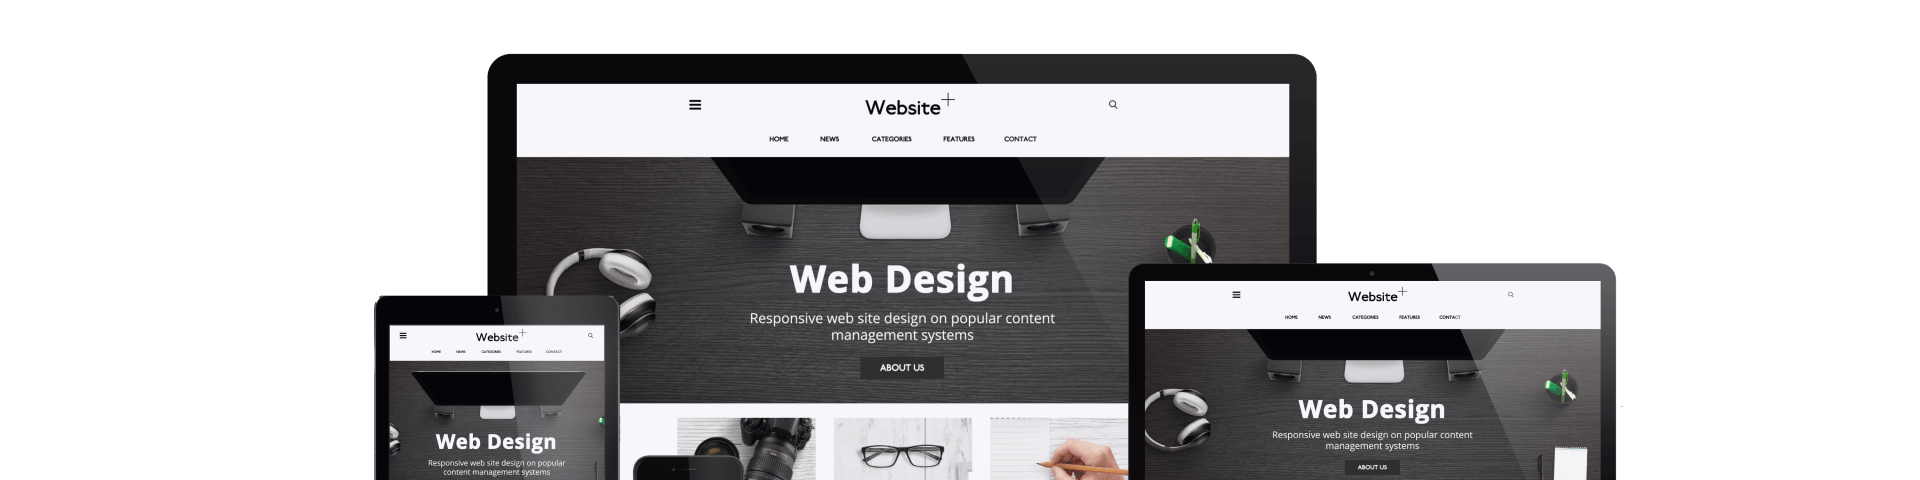 Effective Web Design Guide